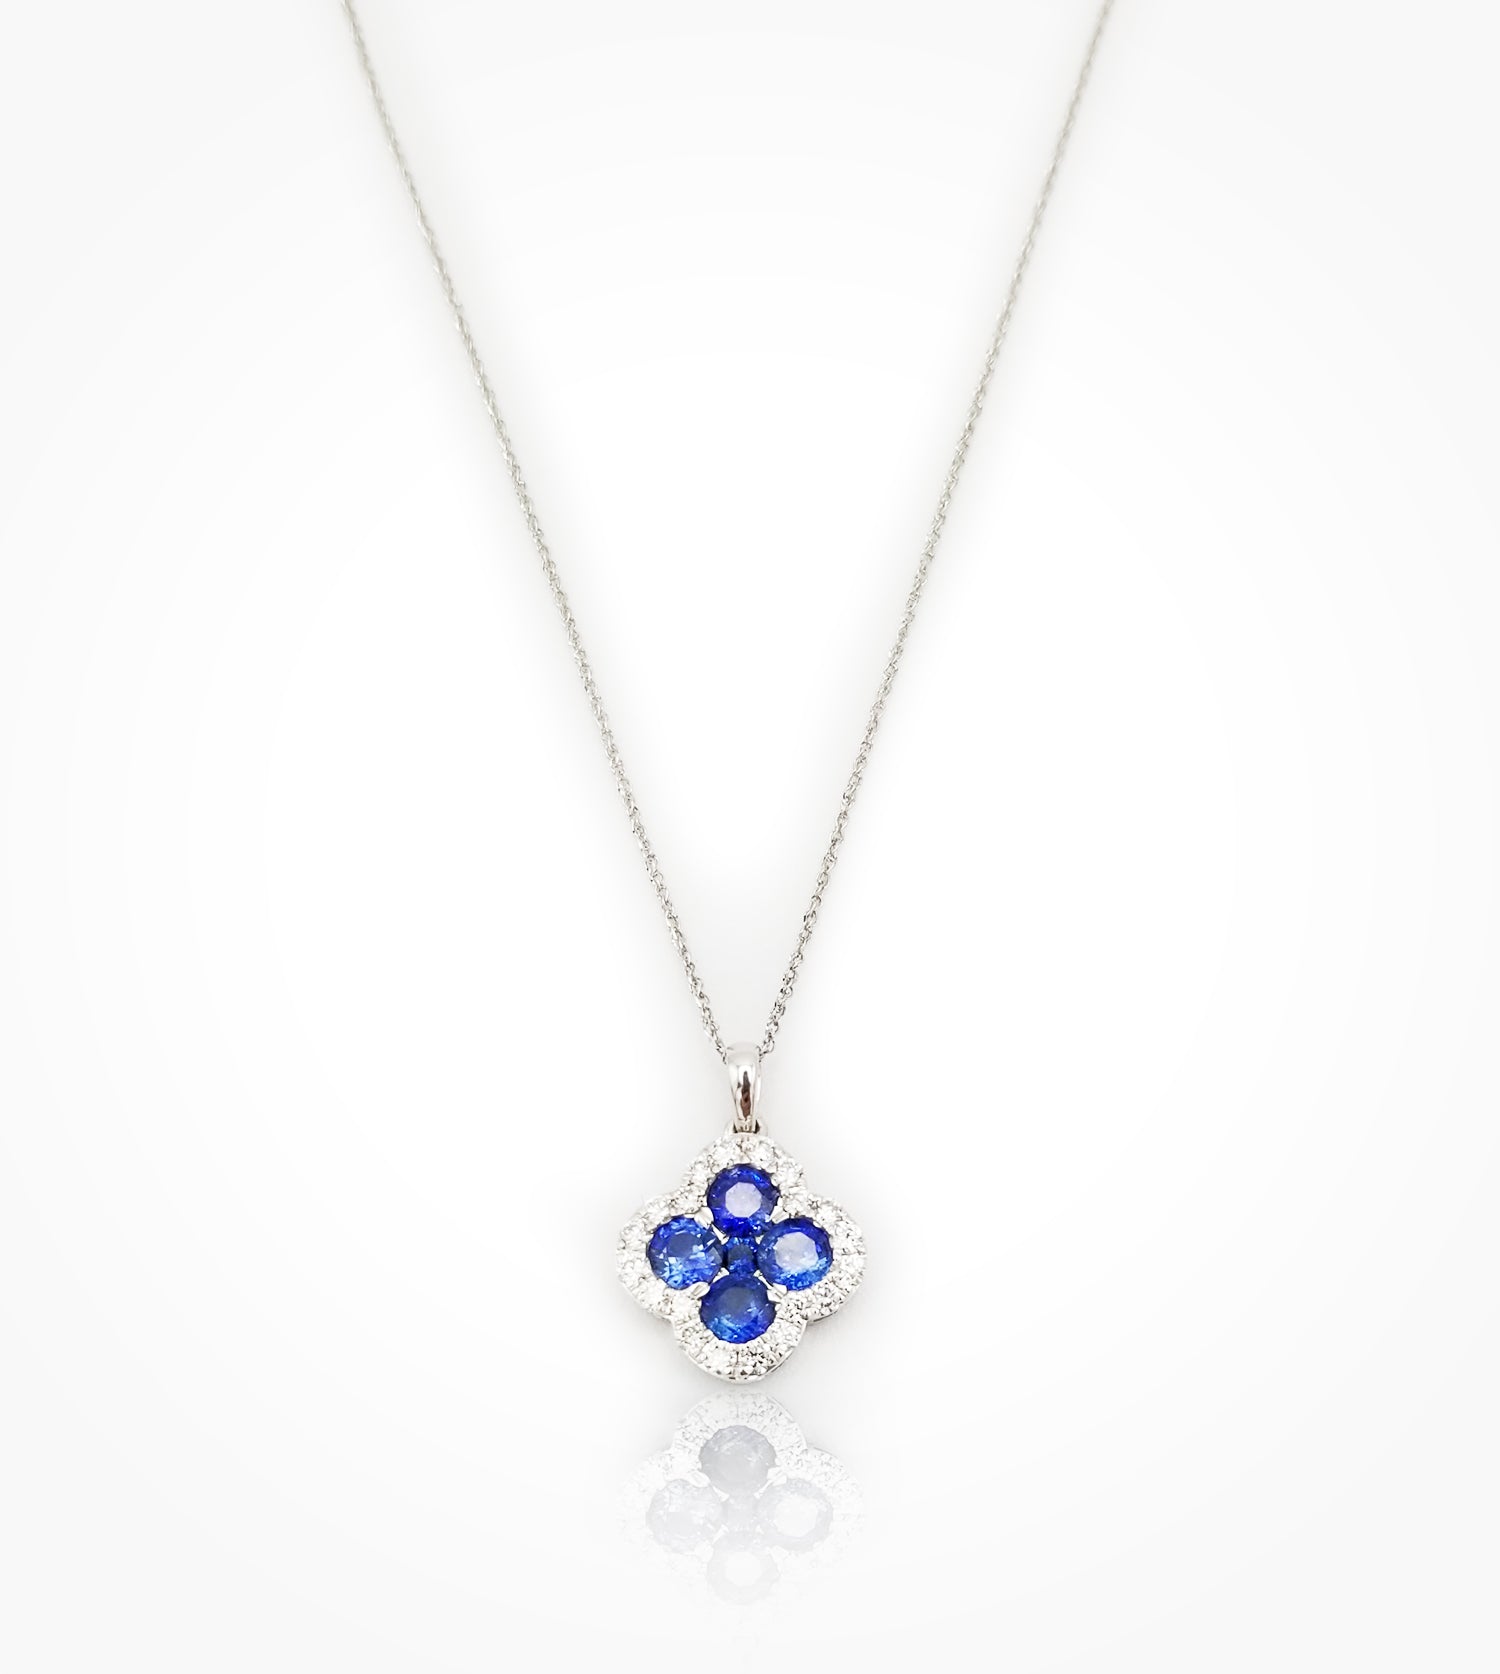 PD07681 14KW quatrefoil Sapphire and Diamond pendant and chain.